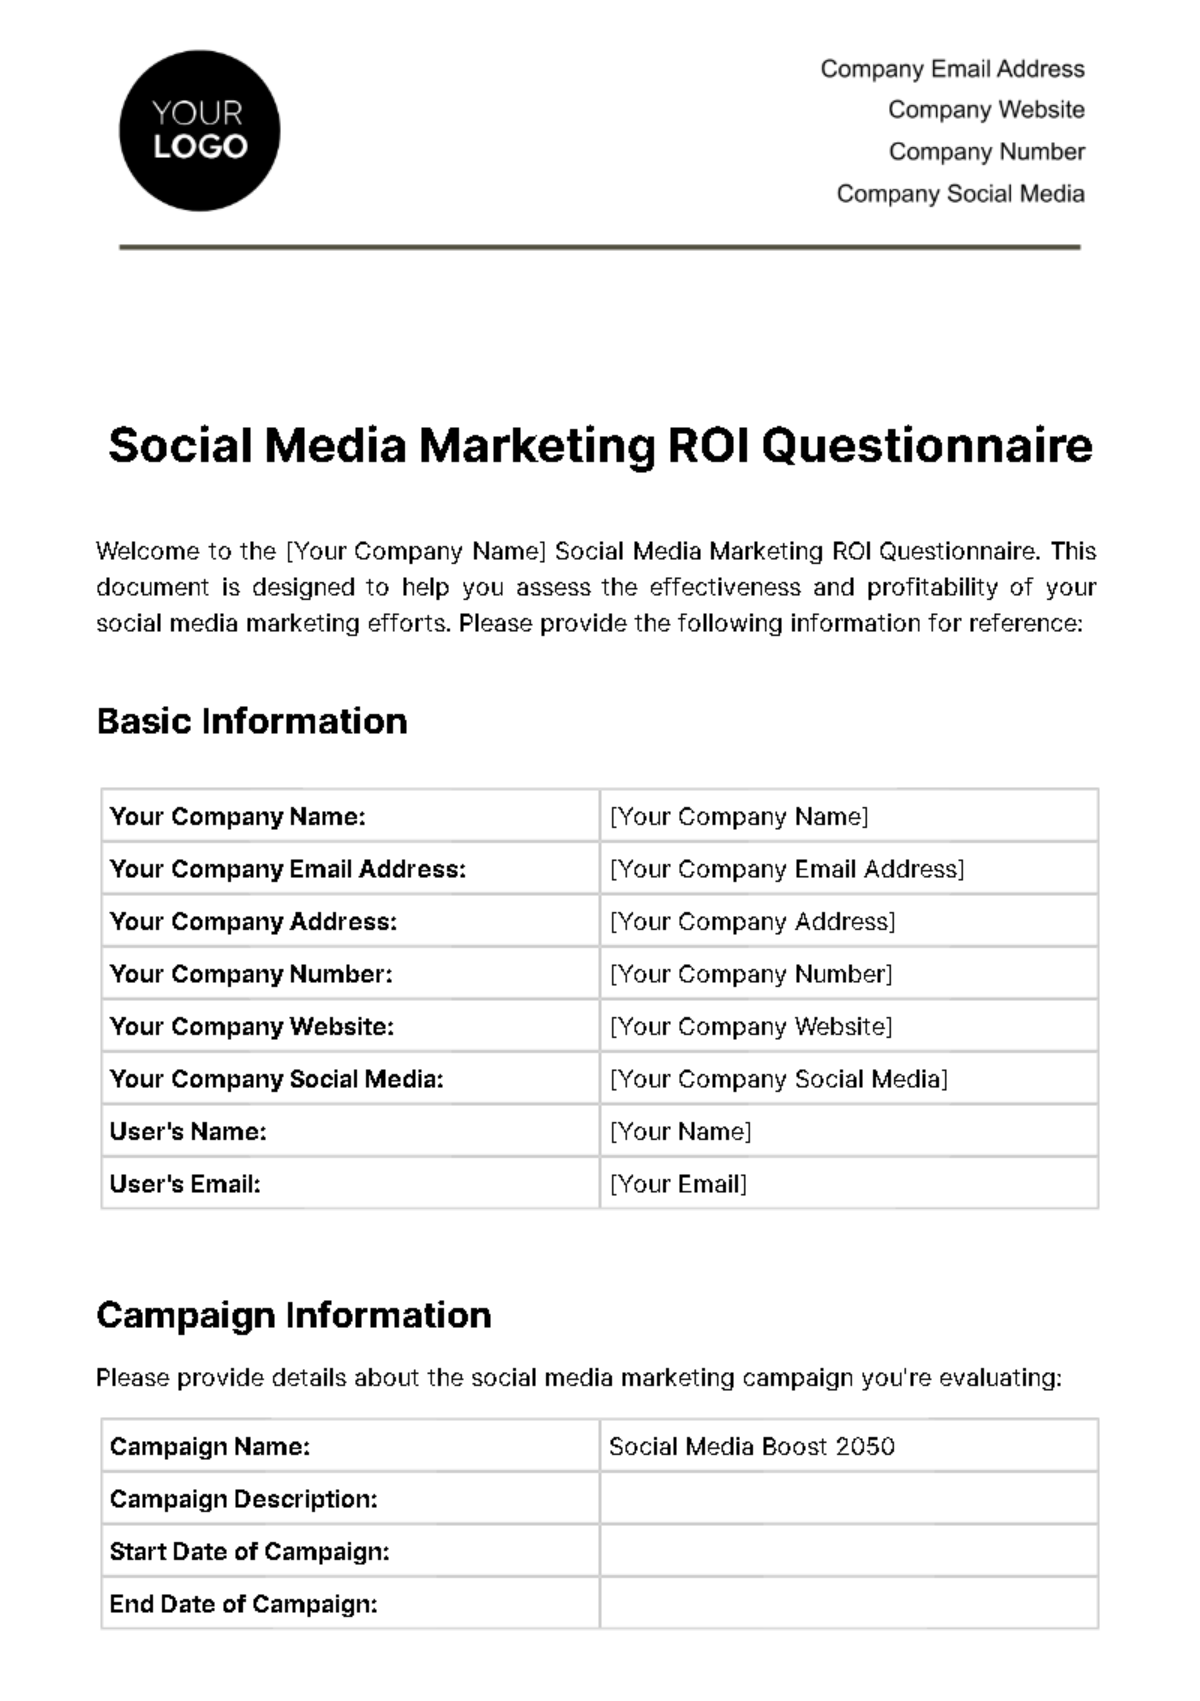 Free Social Media Marketing ROI Questionnaire Template